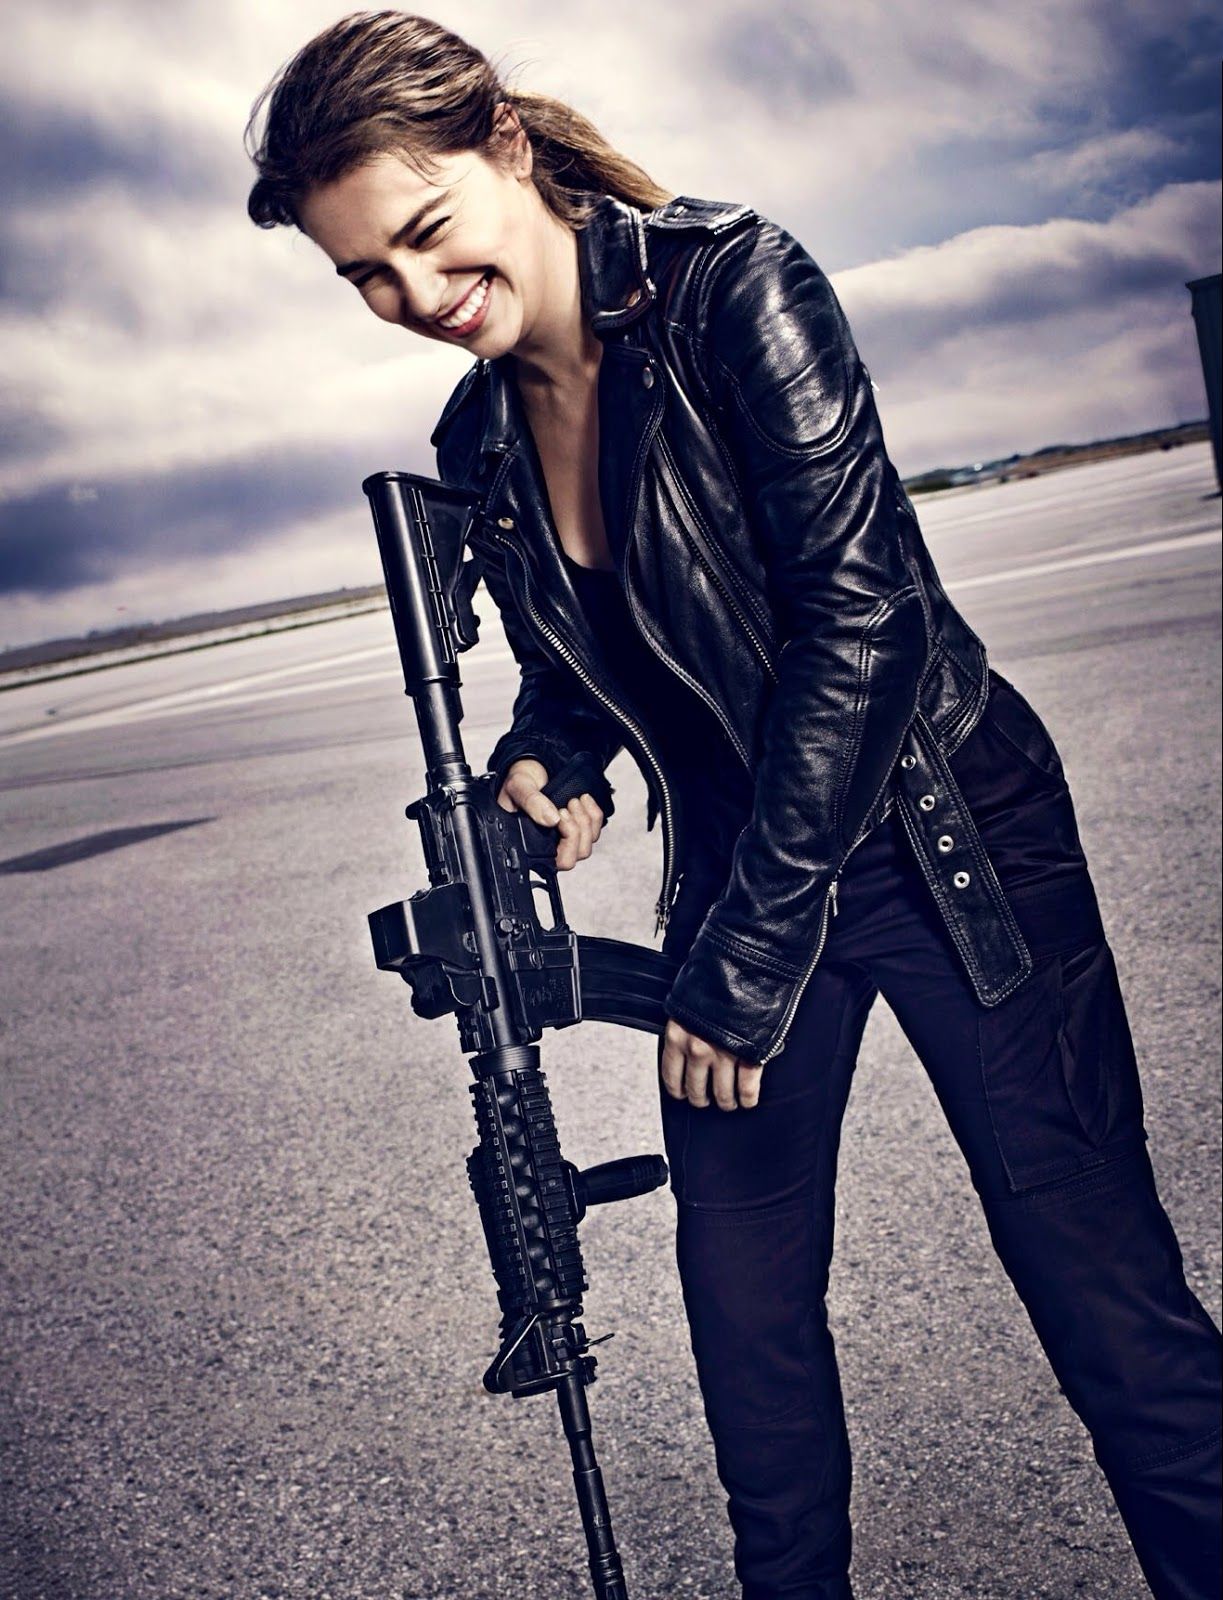 Terminator Genisys Actress Emilia Clarke Full HD Image And